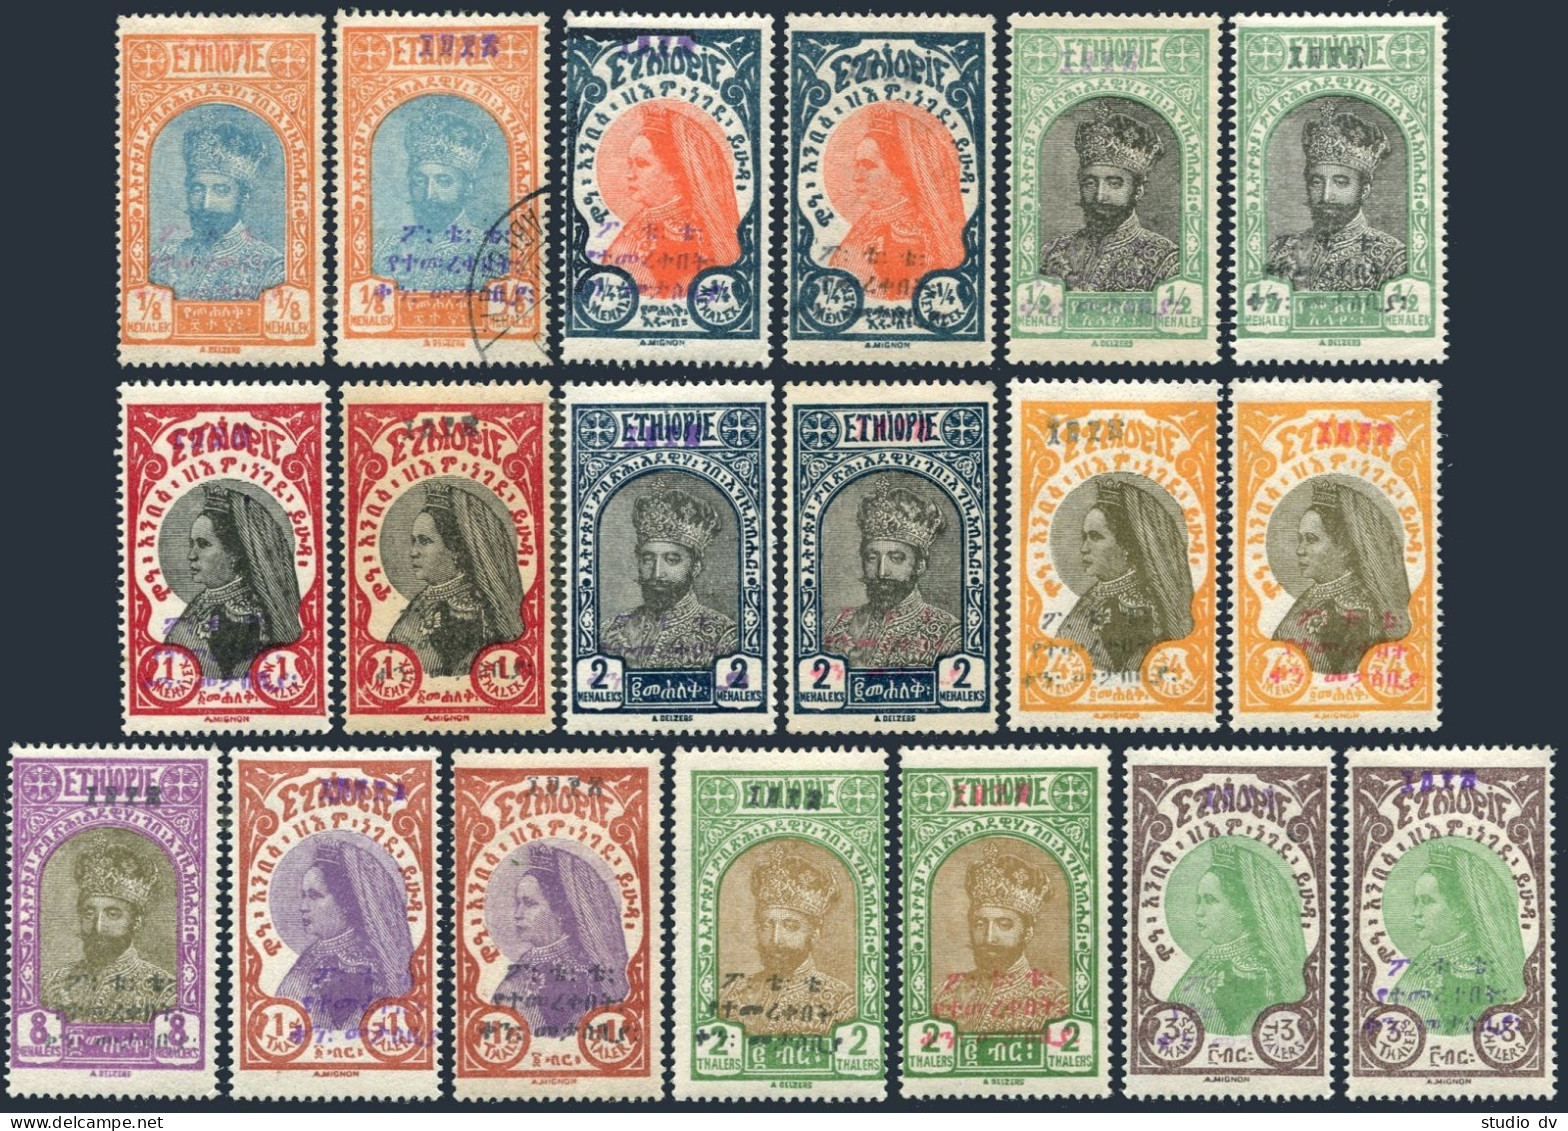 Ethiopia 165-174,19 Overprinted,MNH. Post Office-Addis Ababa,1928.Prince Tafari. - Äthiopien